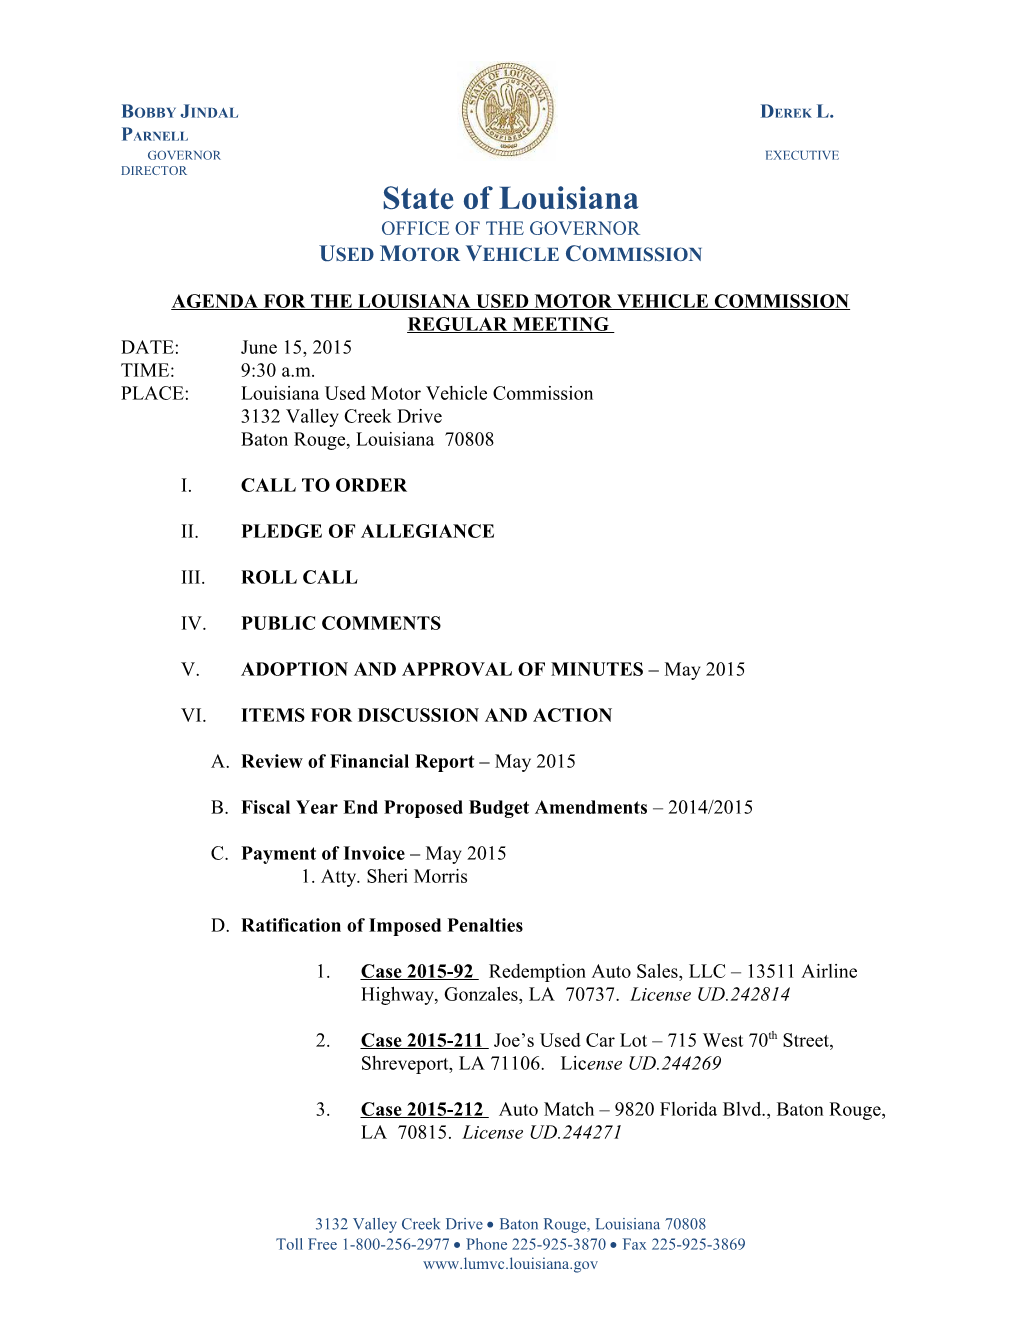 Agenda for the Louisiana Used Motor Vehicle Commission s1